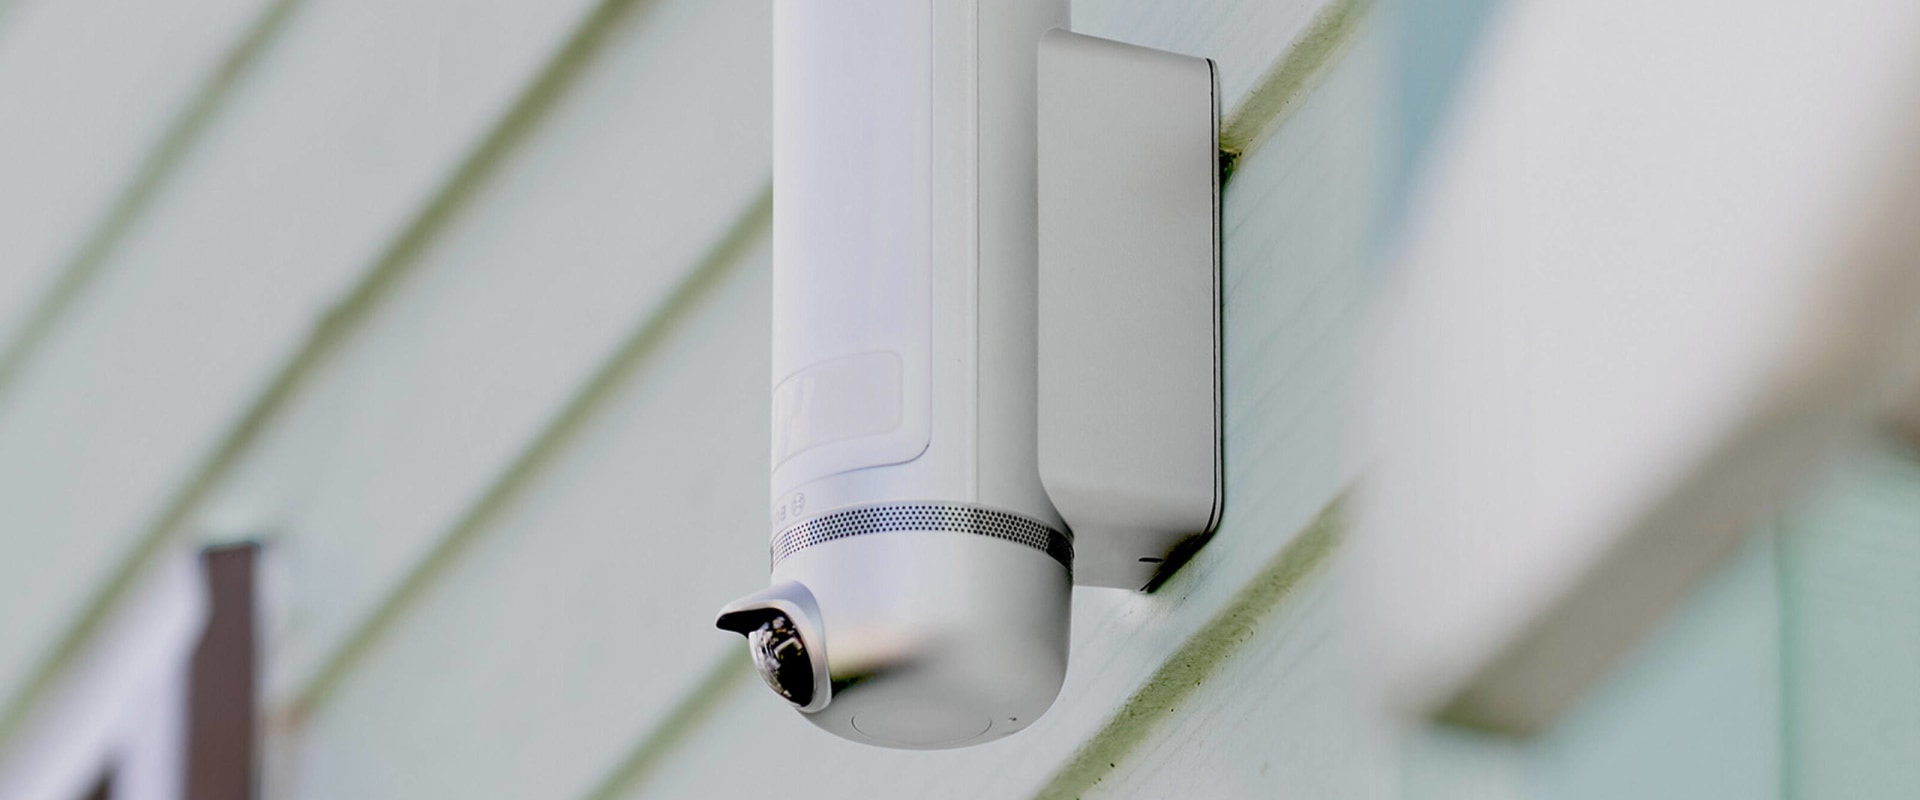 Exploring Outdoor Surveillance Cams